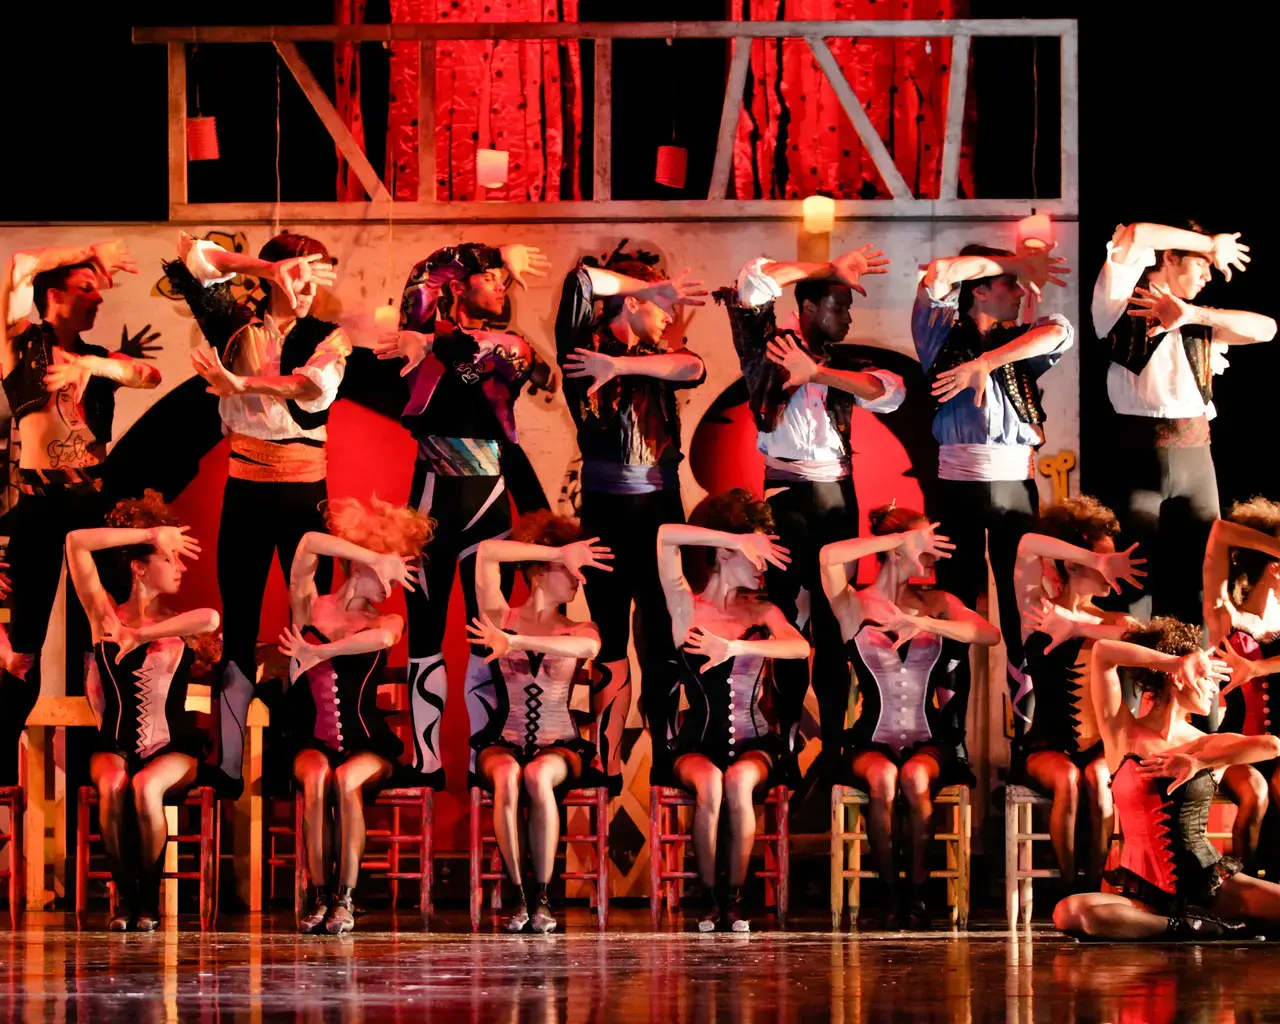 Pennsylvania Ballet dancers performing Carmen. Photo by Alexander Iziliaev.